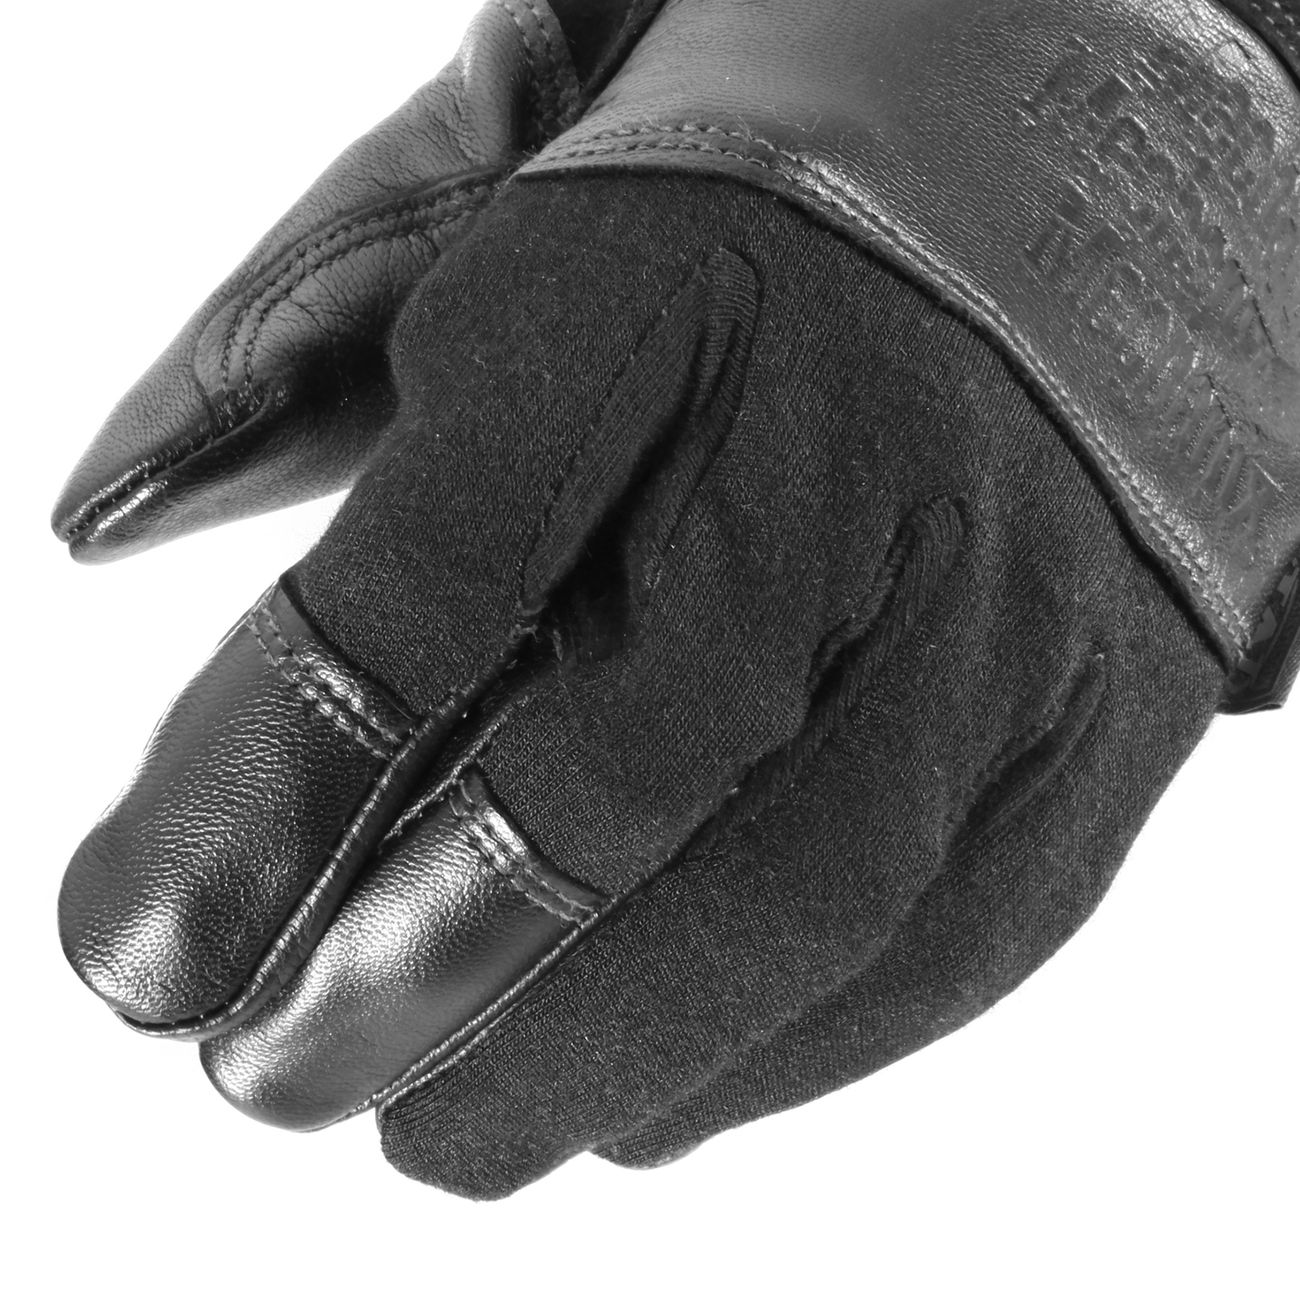 Mechanix Wear Handschuhe Tempest FR Nomex schwarz Bild 1